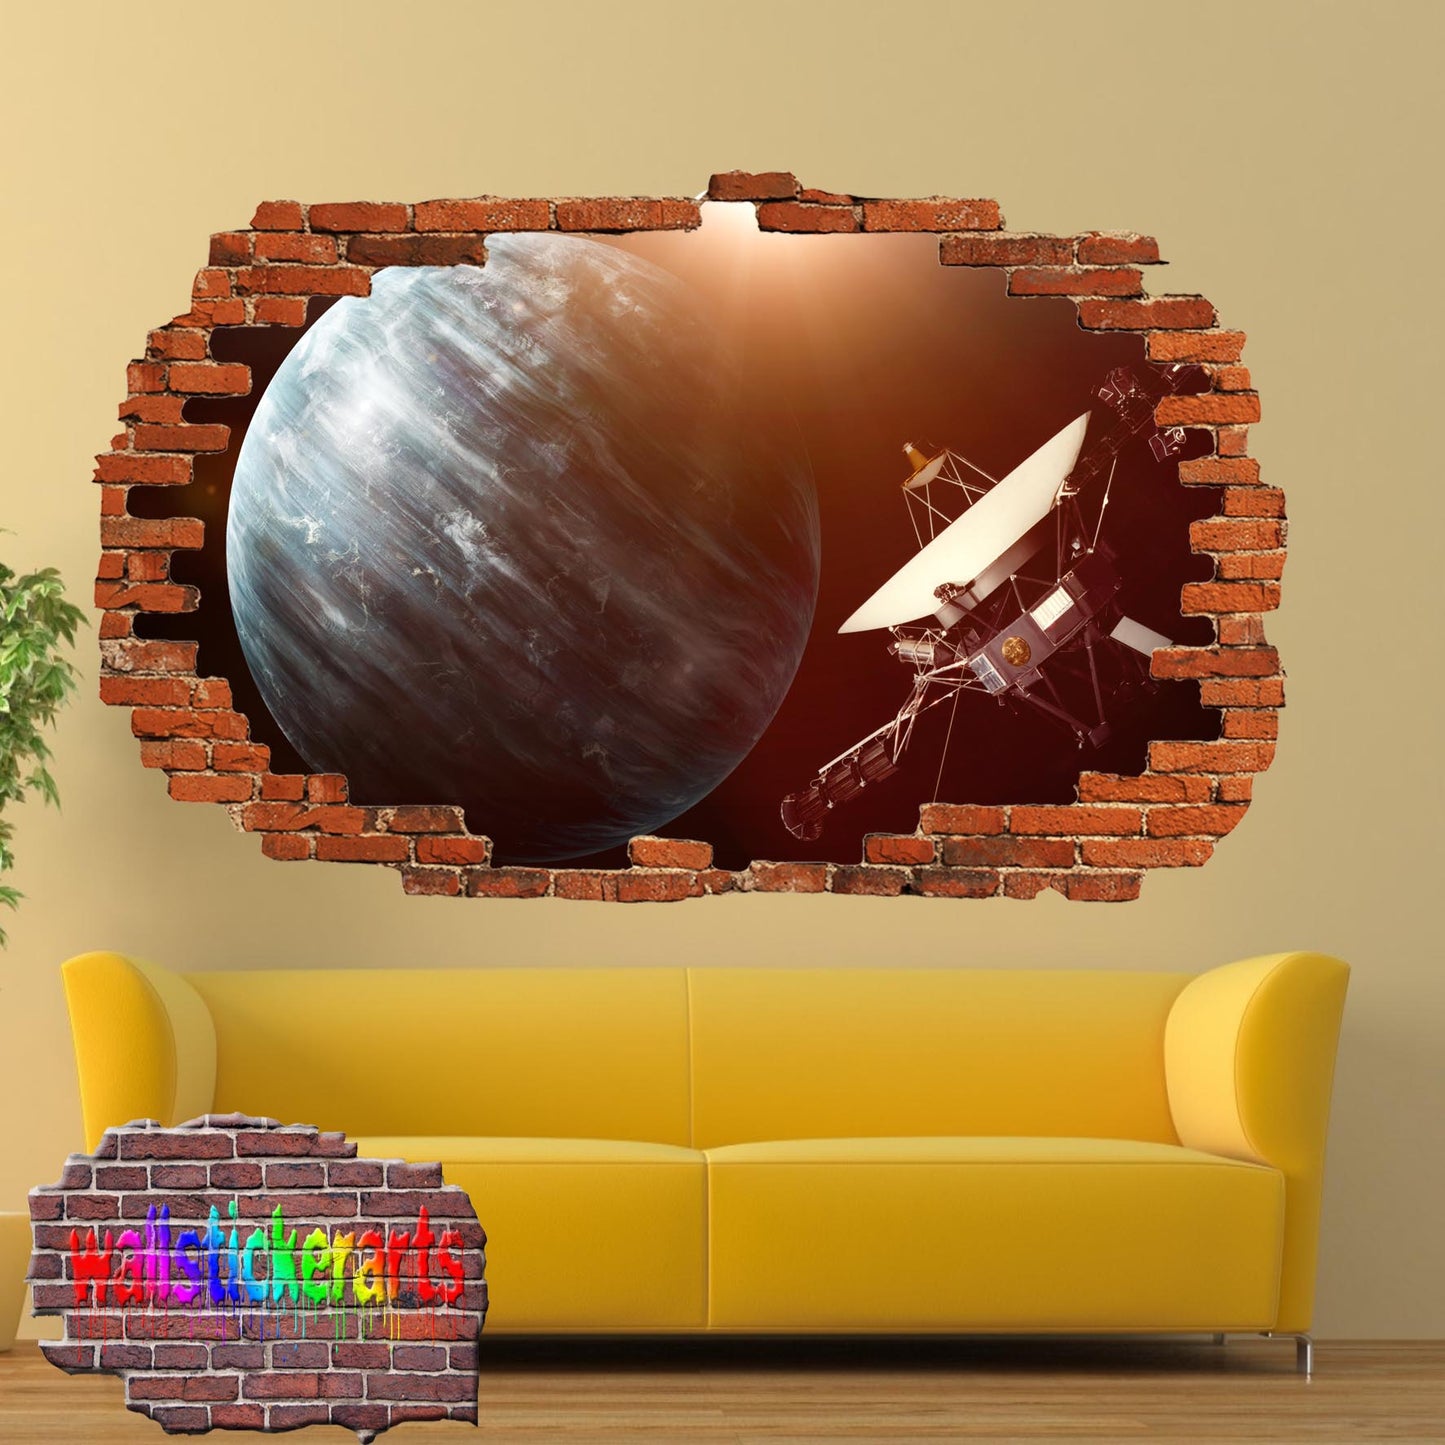 Planets Uranus Satellite Voyager Wall Sticker Poster Decal Mural